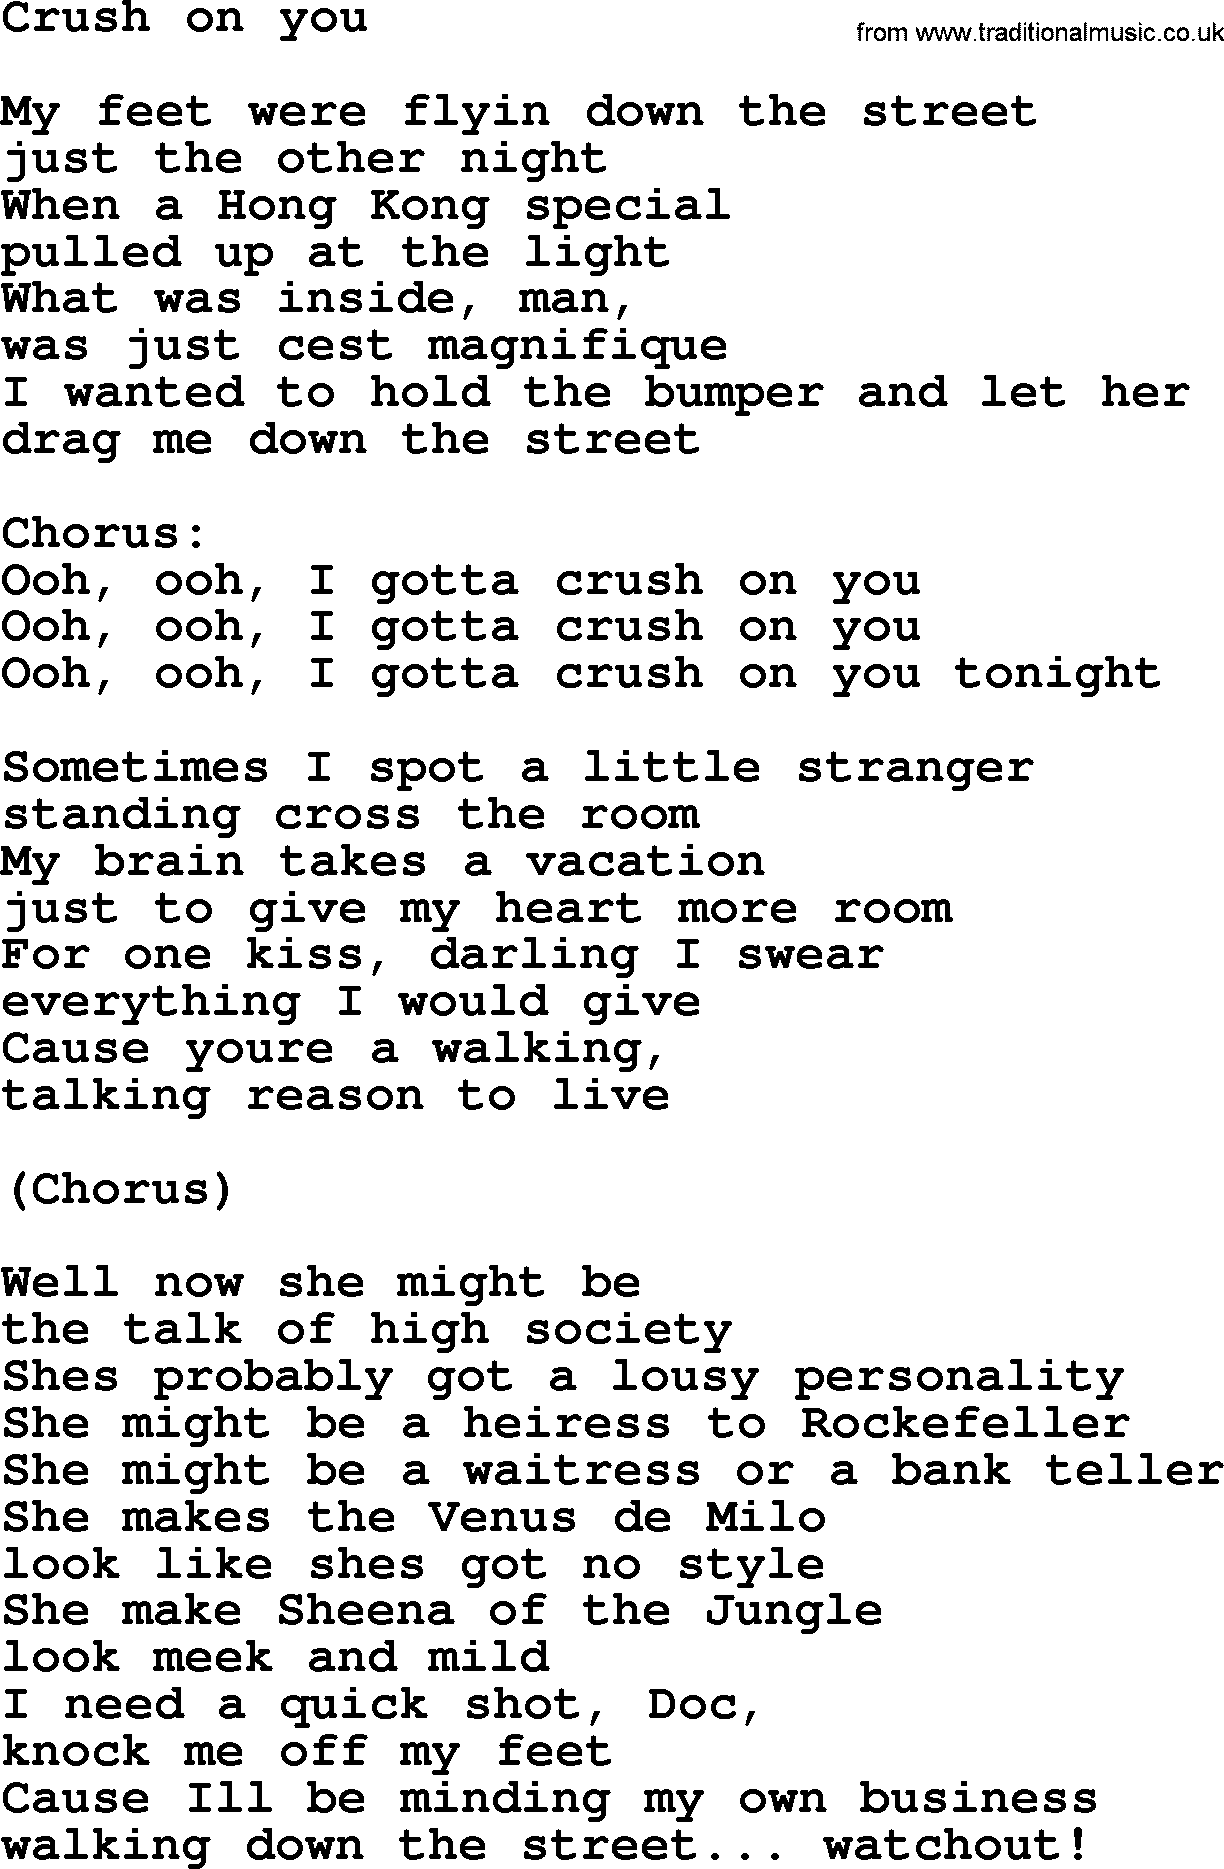 Bruce Springsteen song: Crush On You lyrics